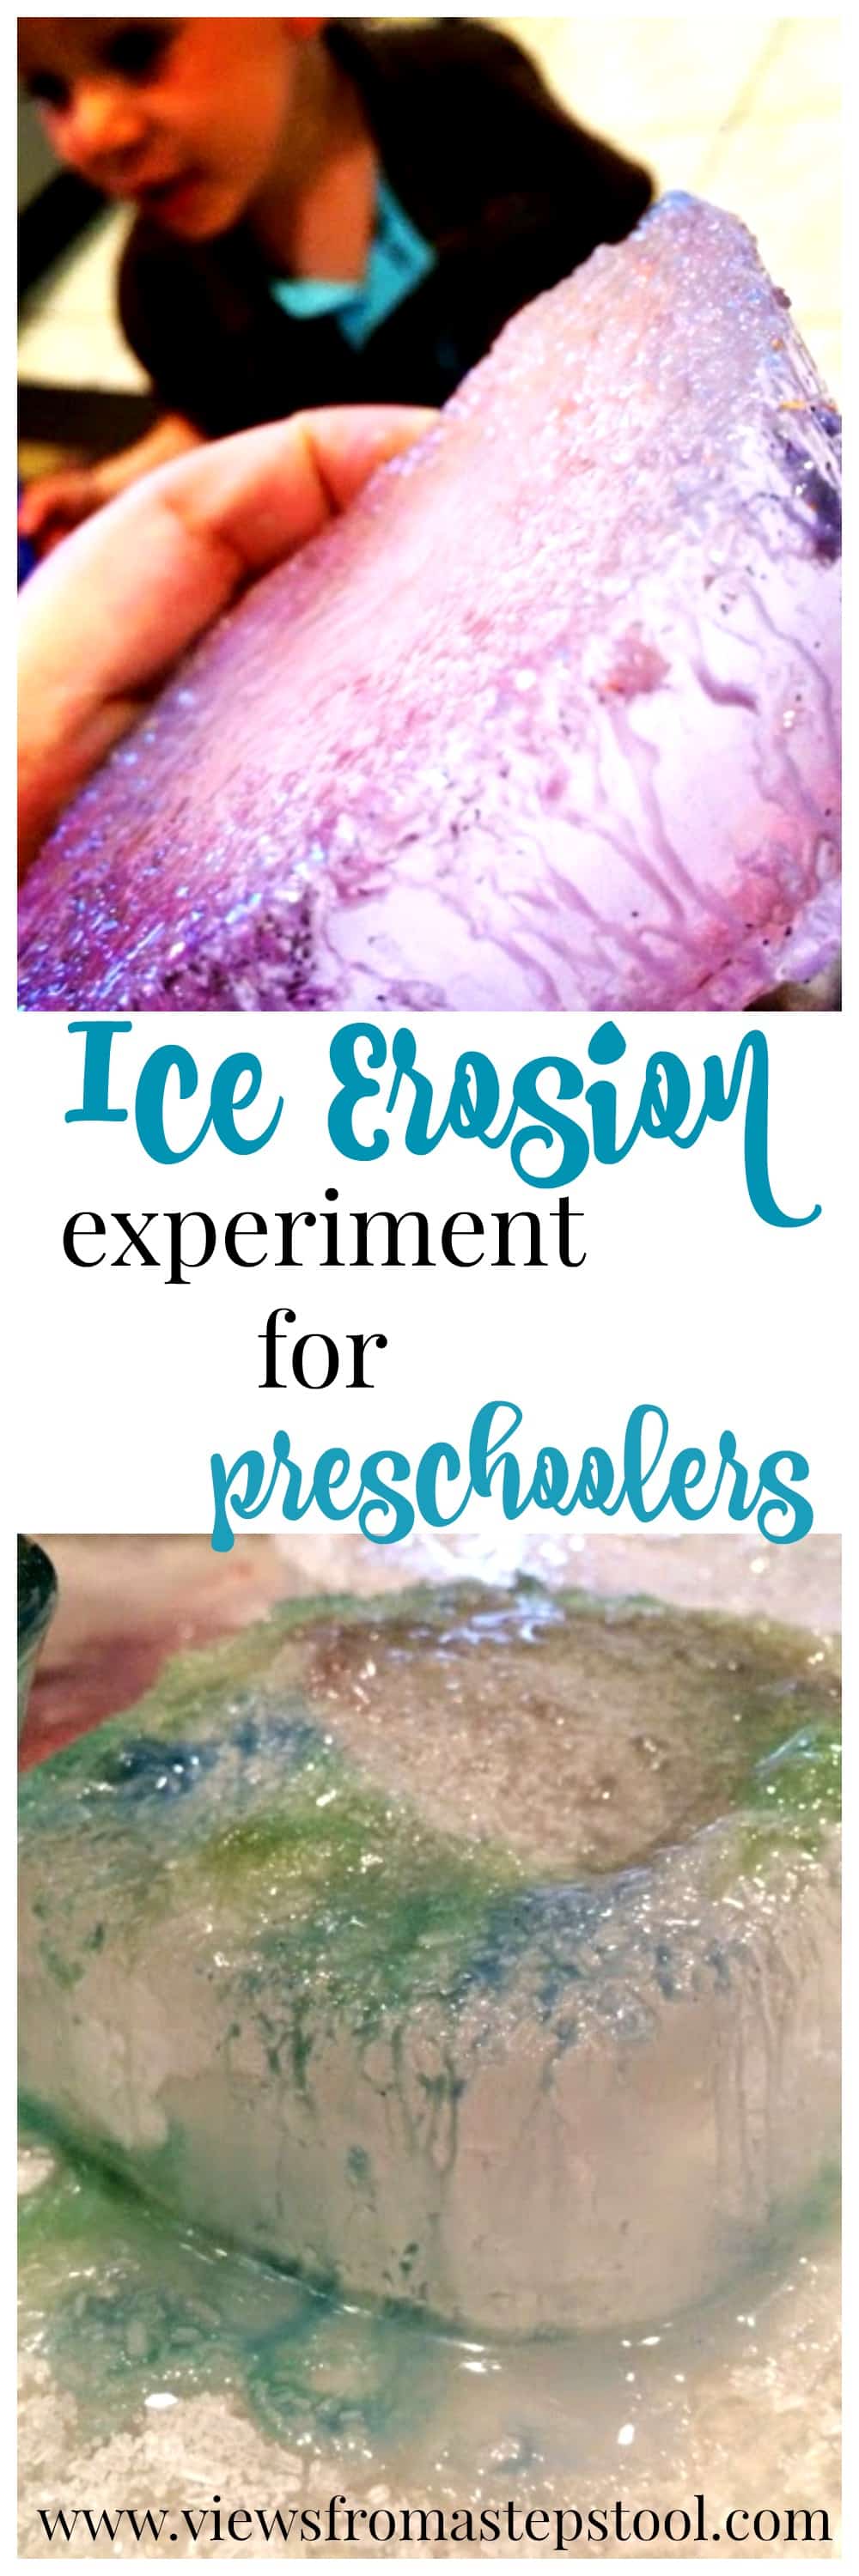 Ice Erosion for Preschoolers Pin